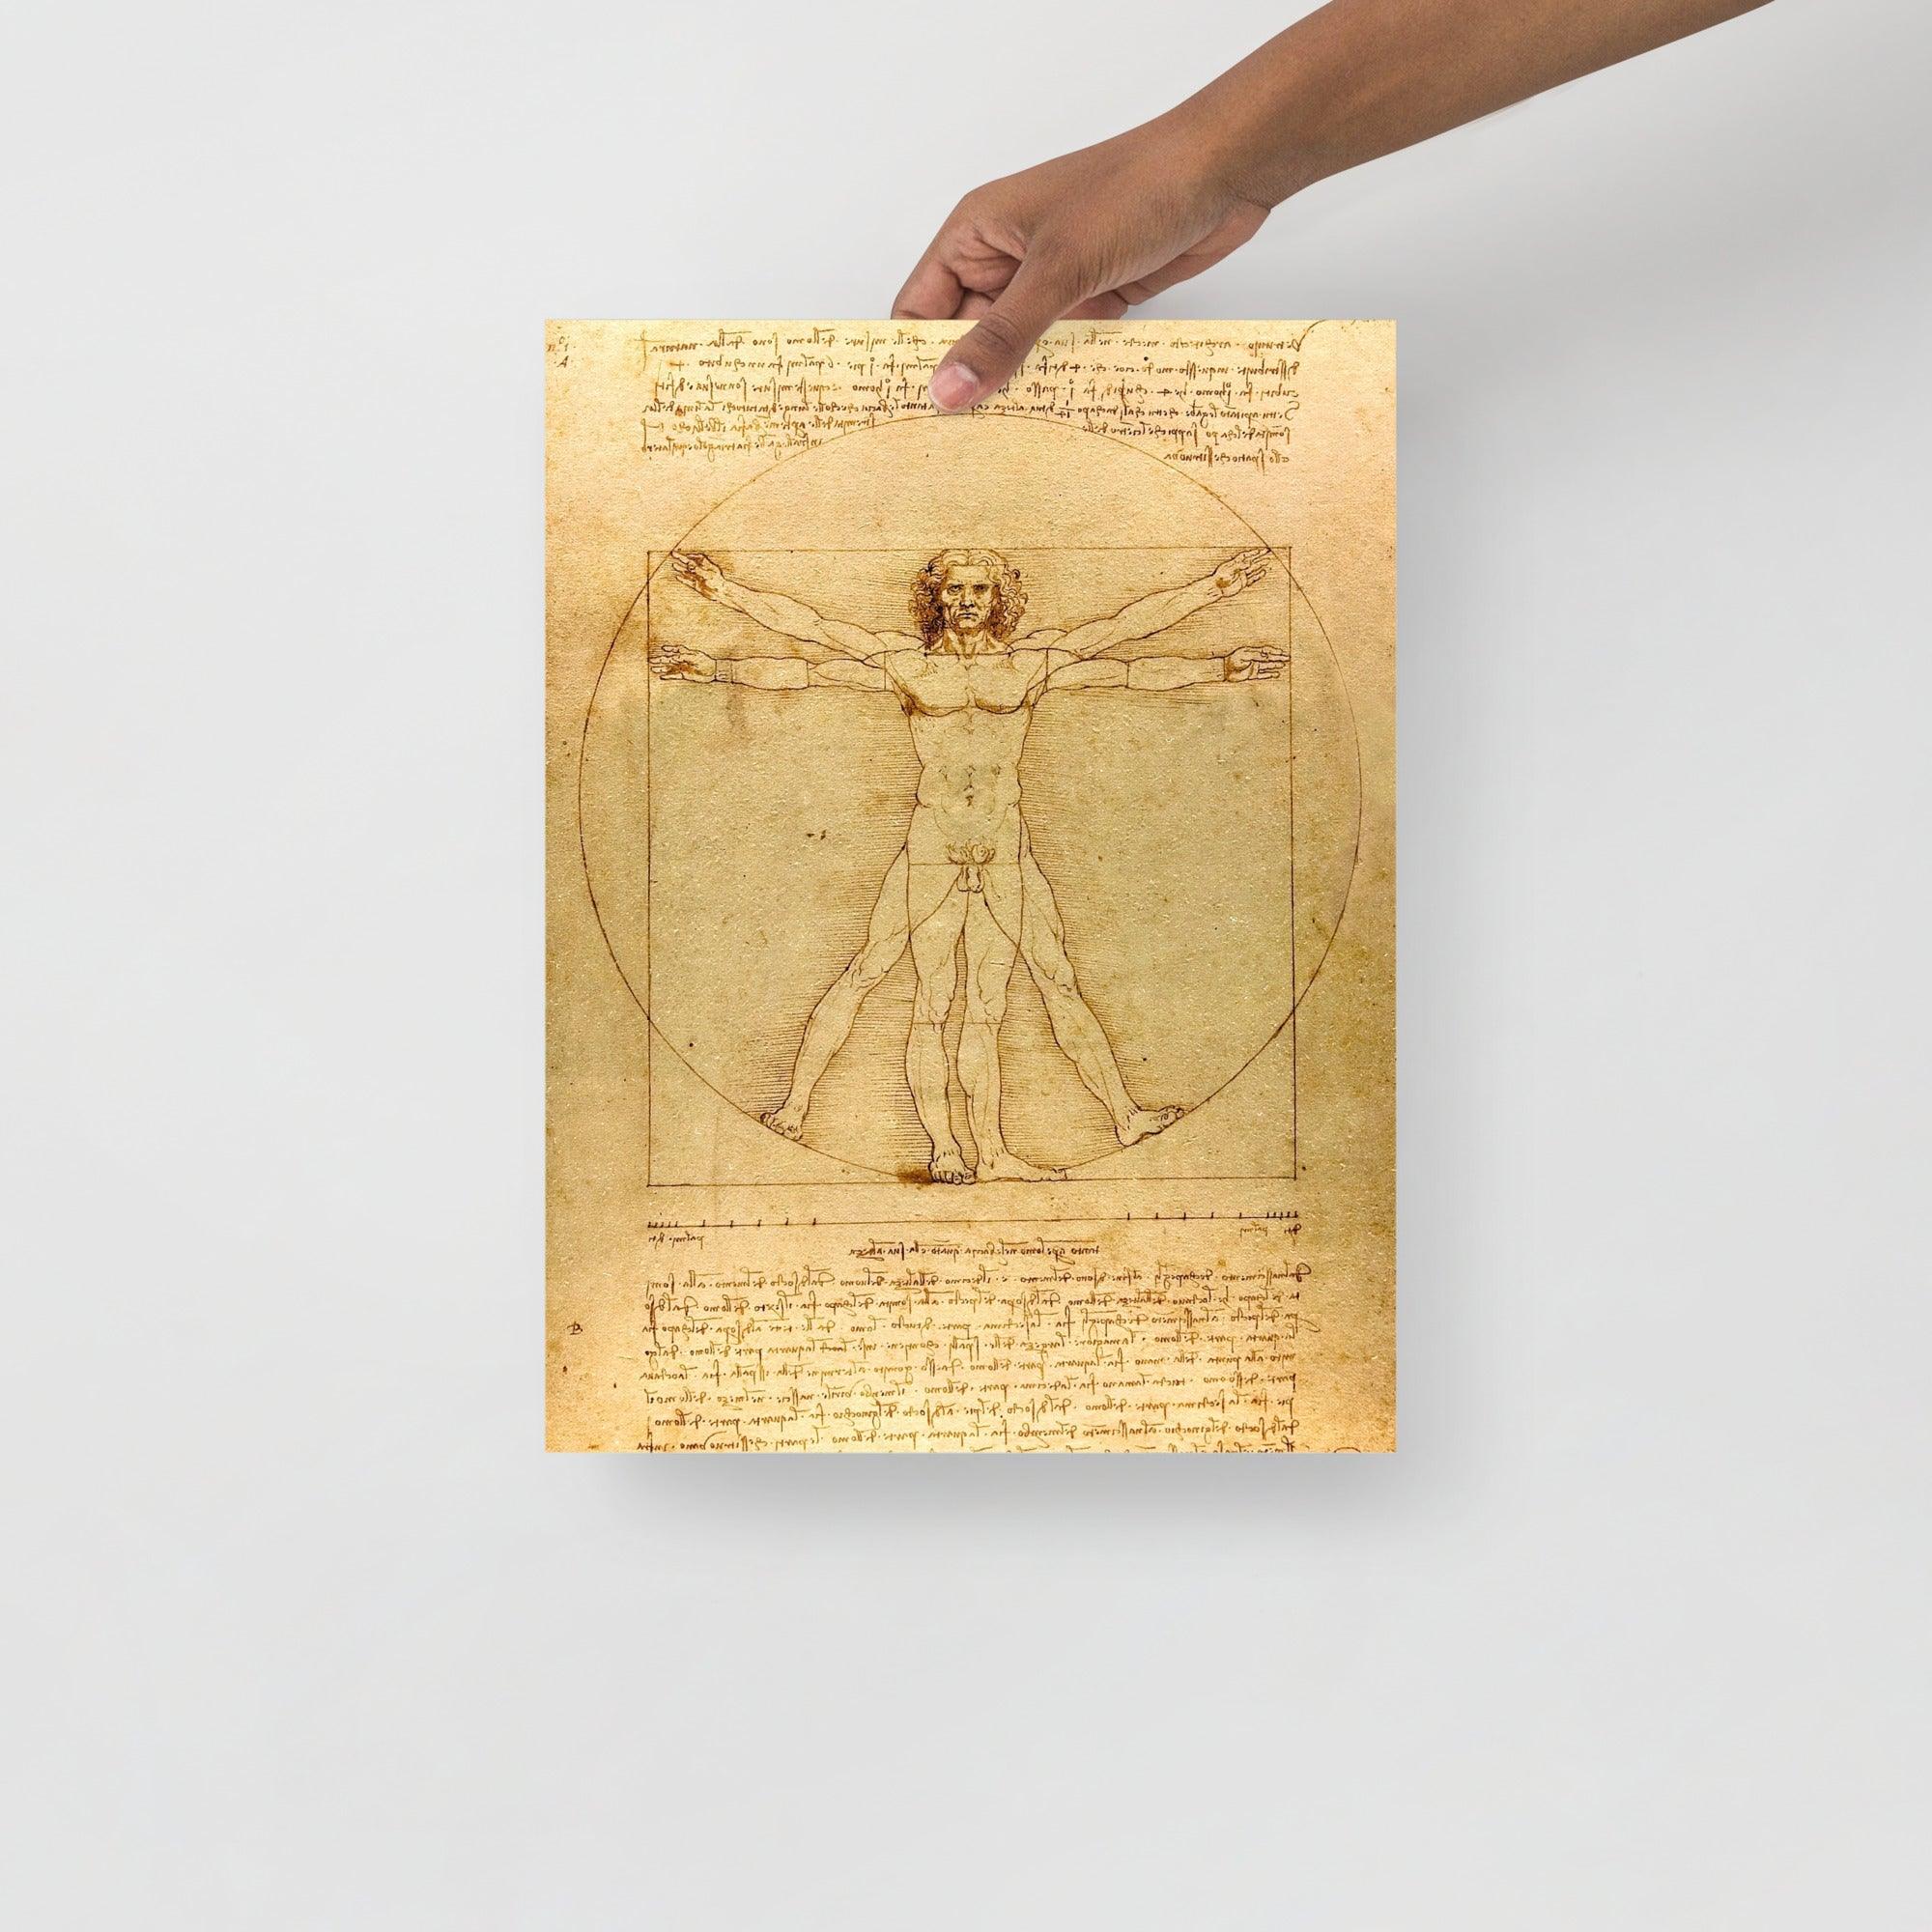 A Vitruvian Man by Leonardo da Vinci poster on a plain backdrop in size 12x16”.